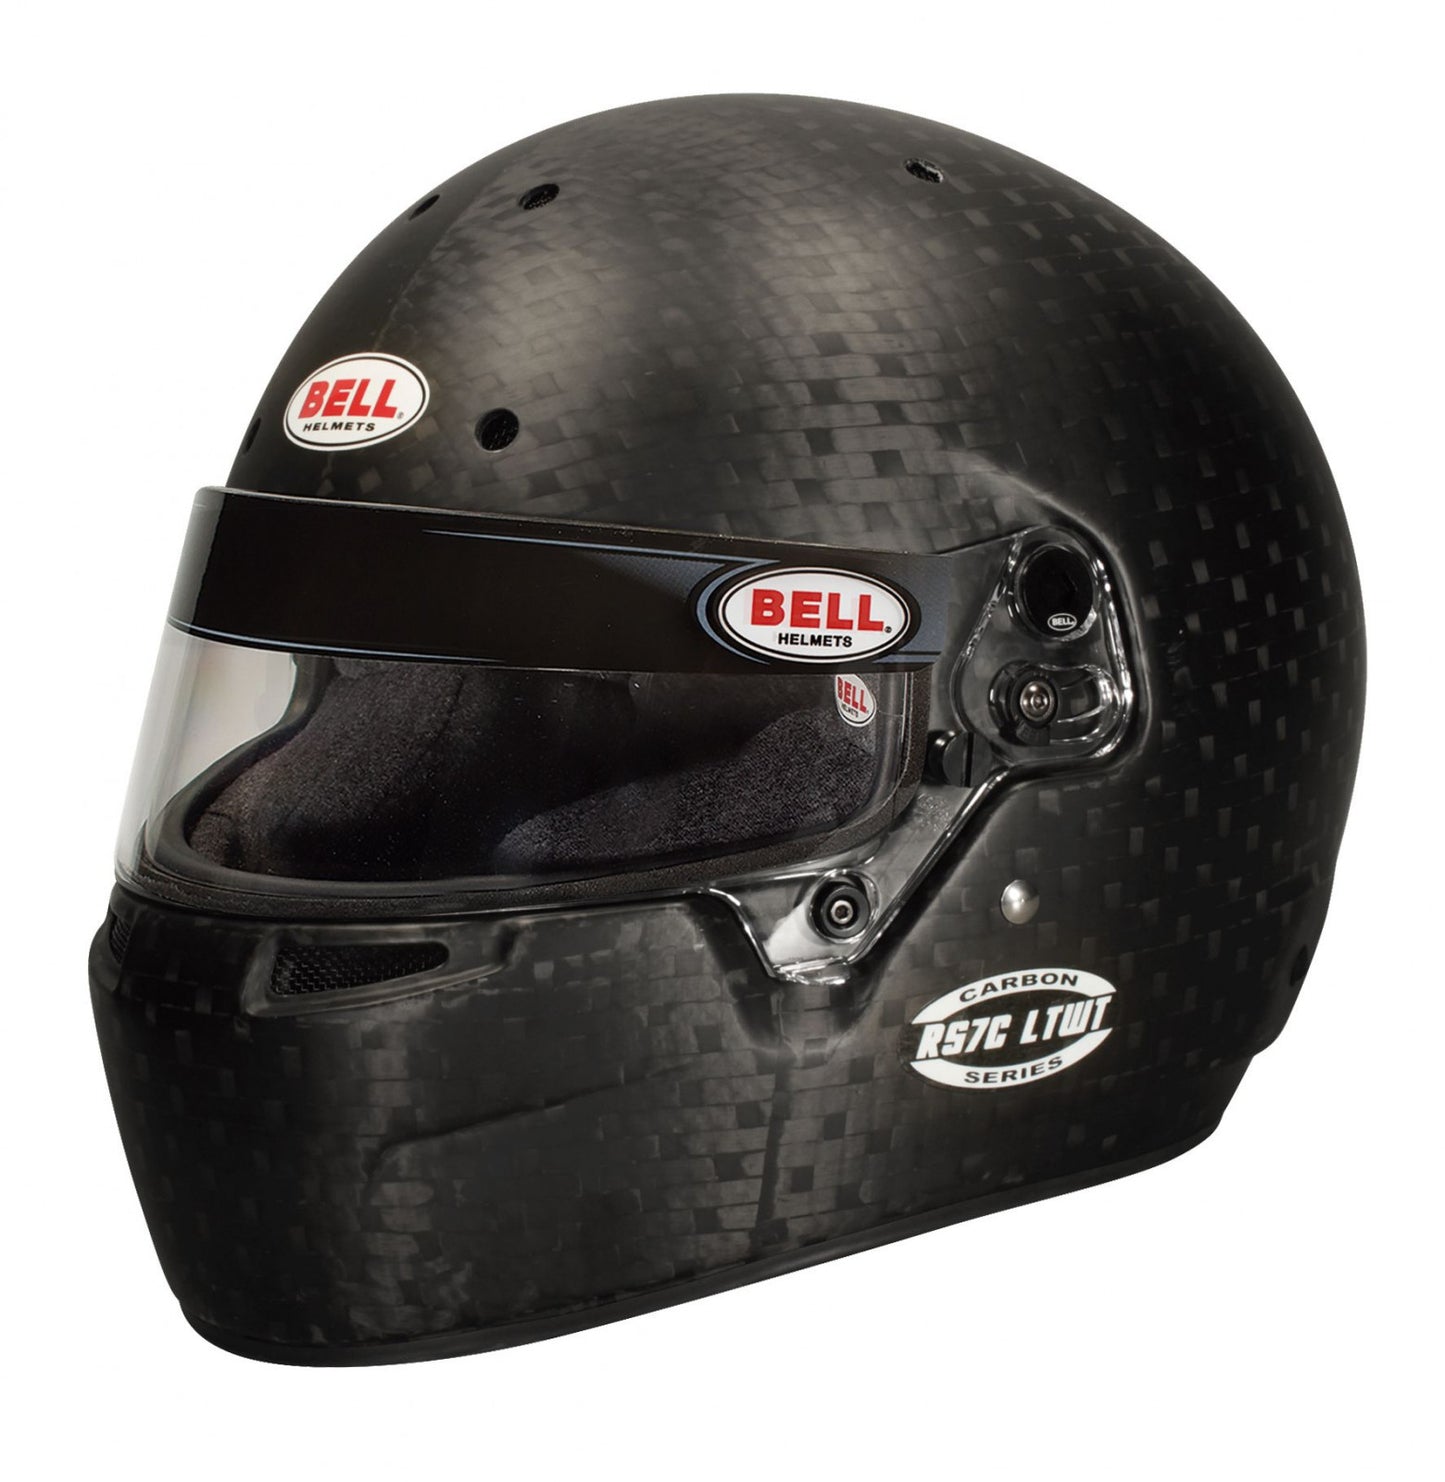 Bell Racing RS7C LTWT Helmet 7 5/8+ (61+ cm) 1237A12